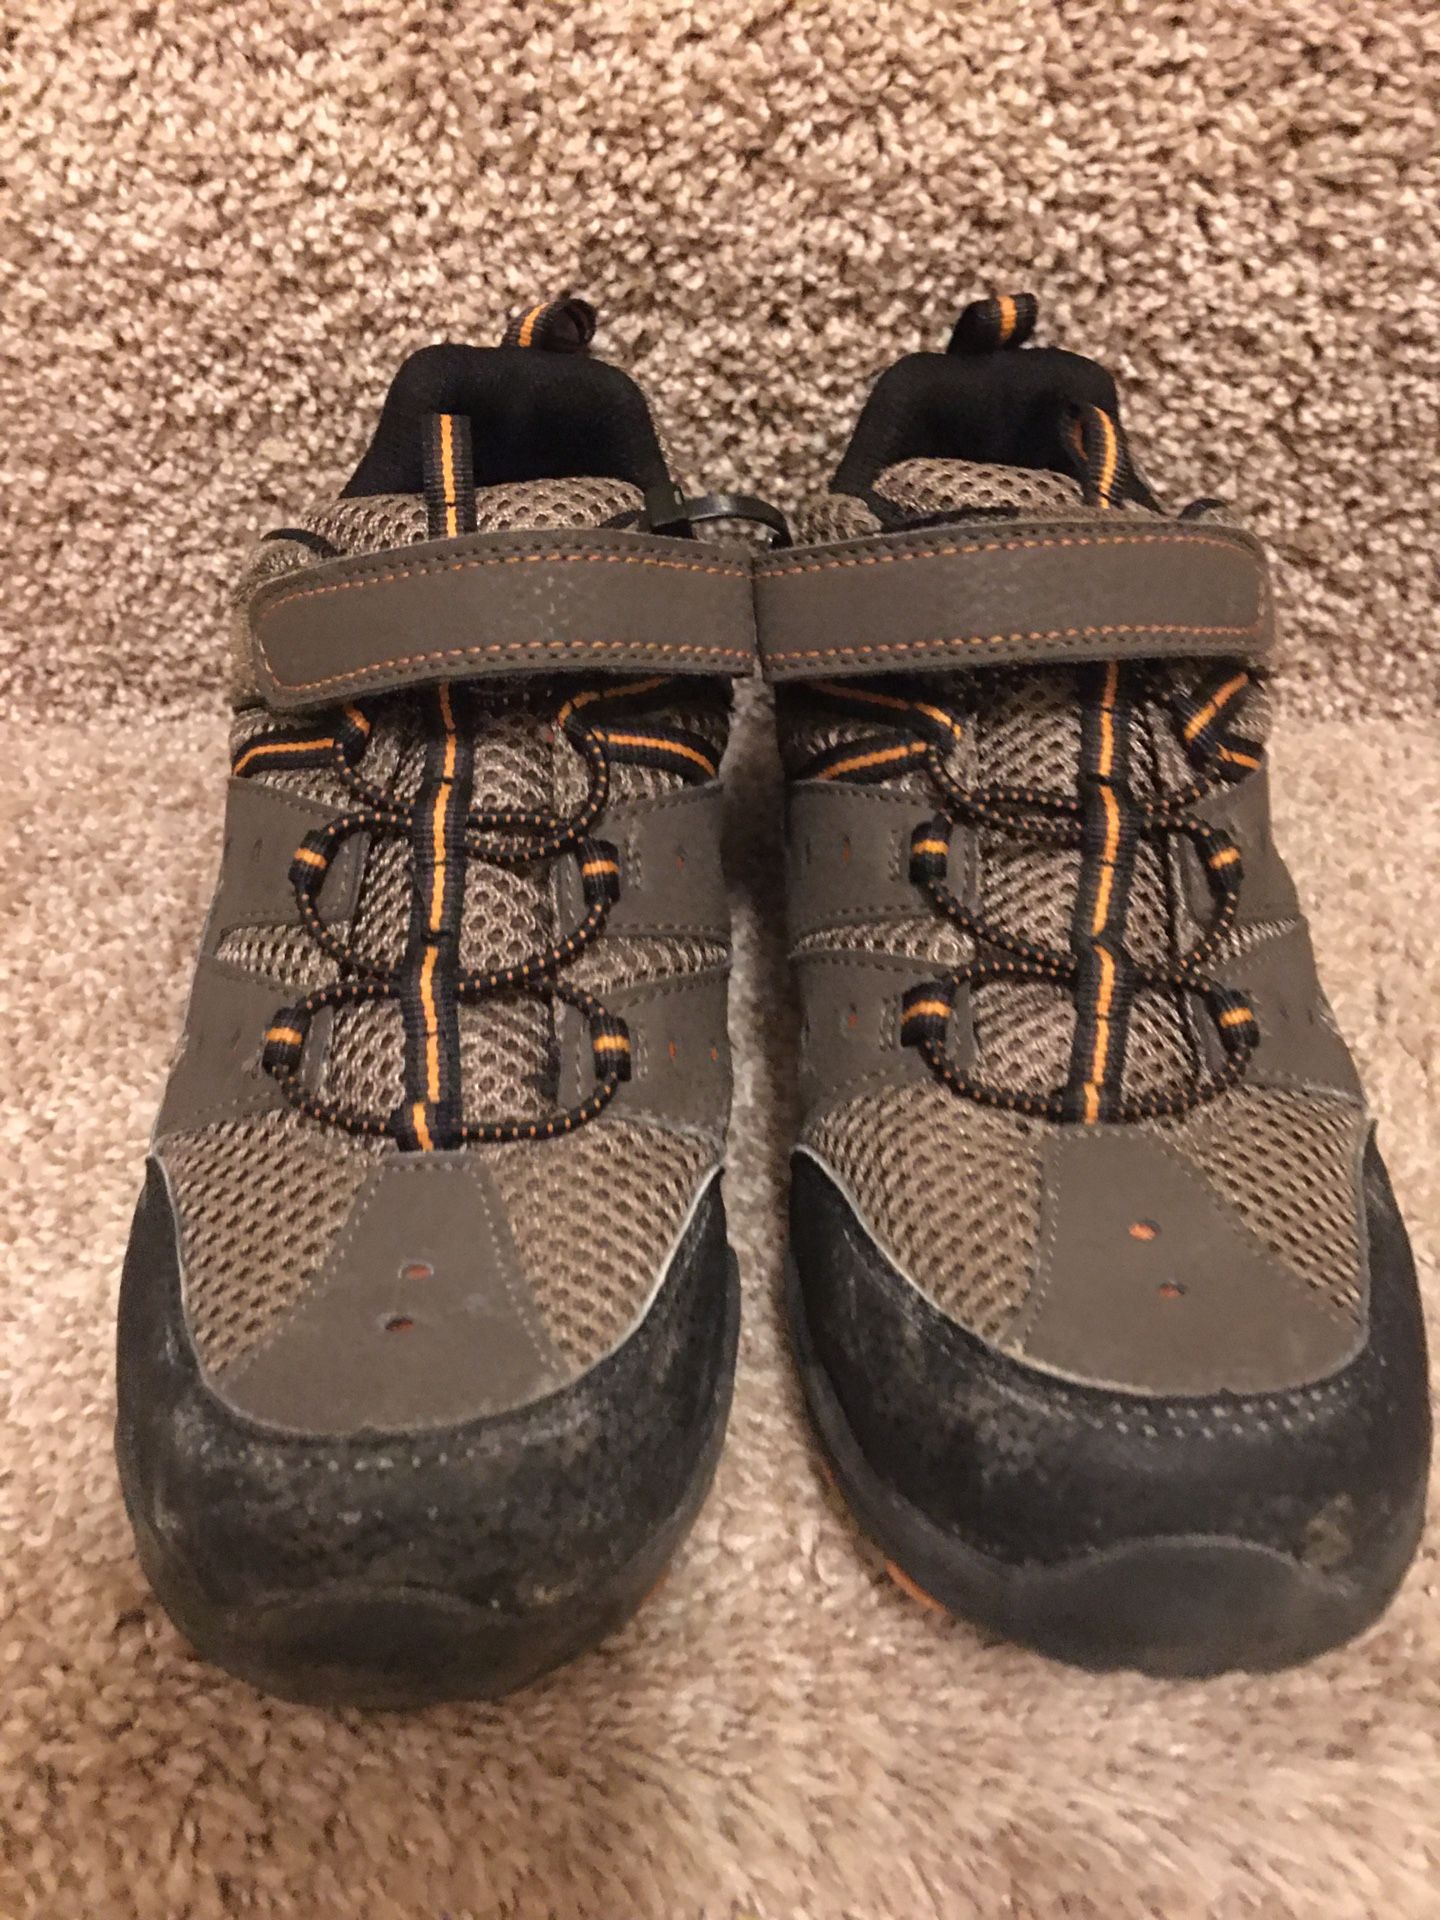 Boys Size 5 Hiking Shoes